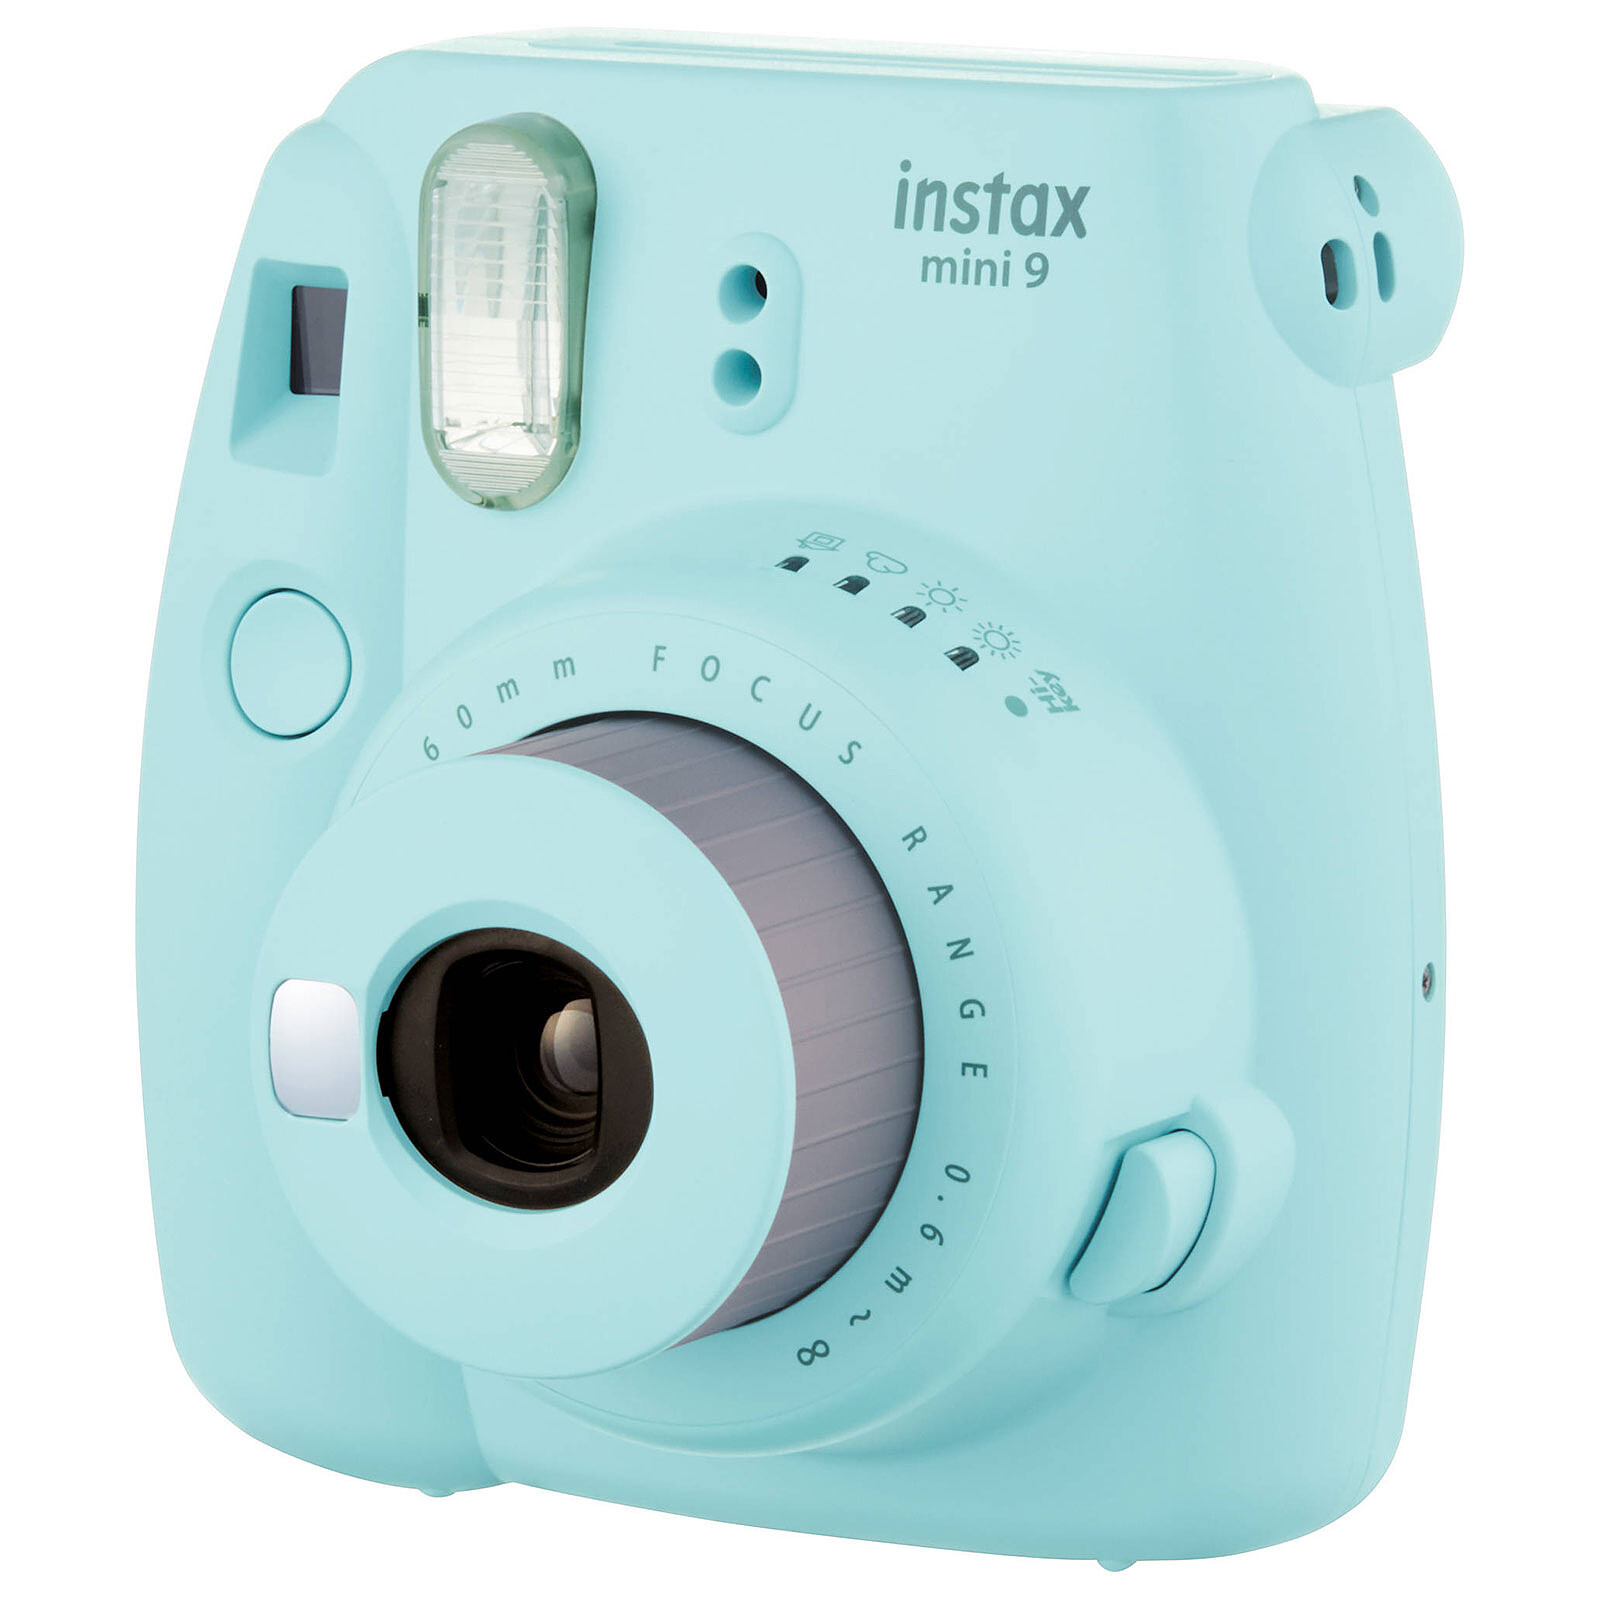 Etui appareil photo FUJI Instax mini - Bleu givré - Pour Instax